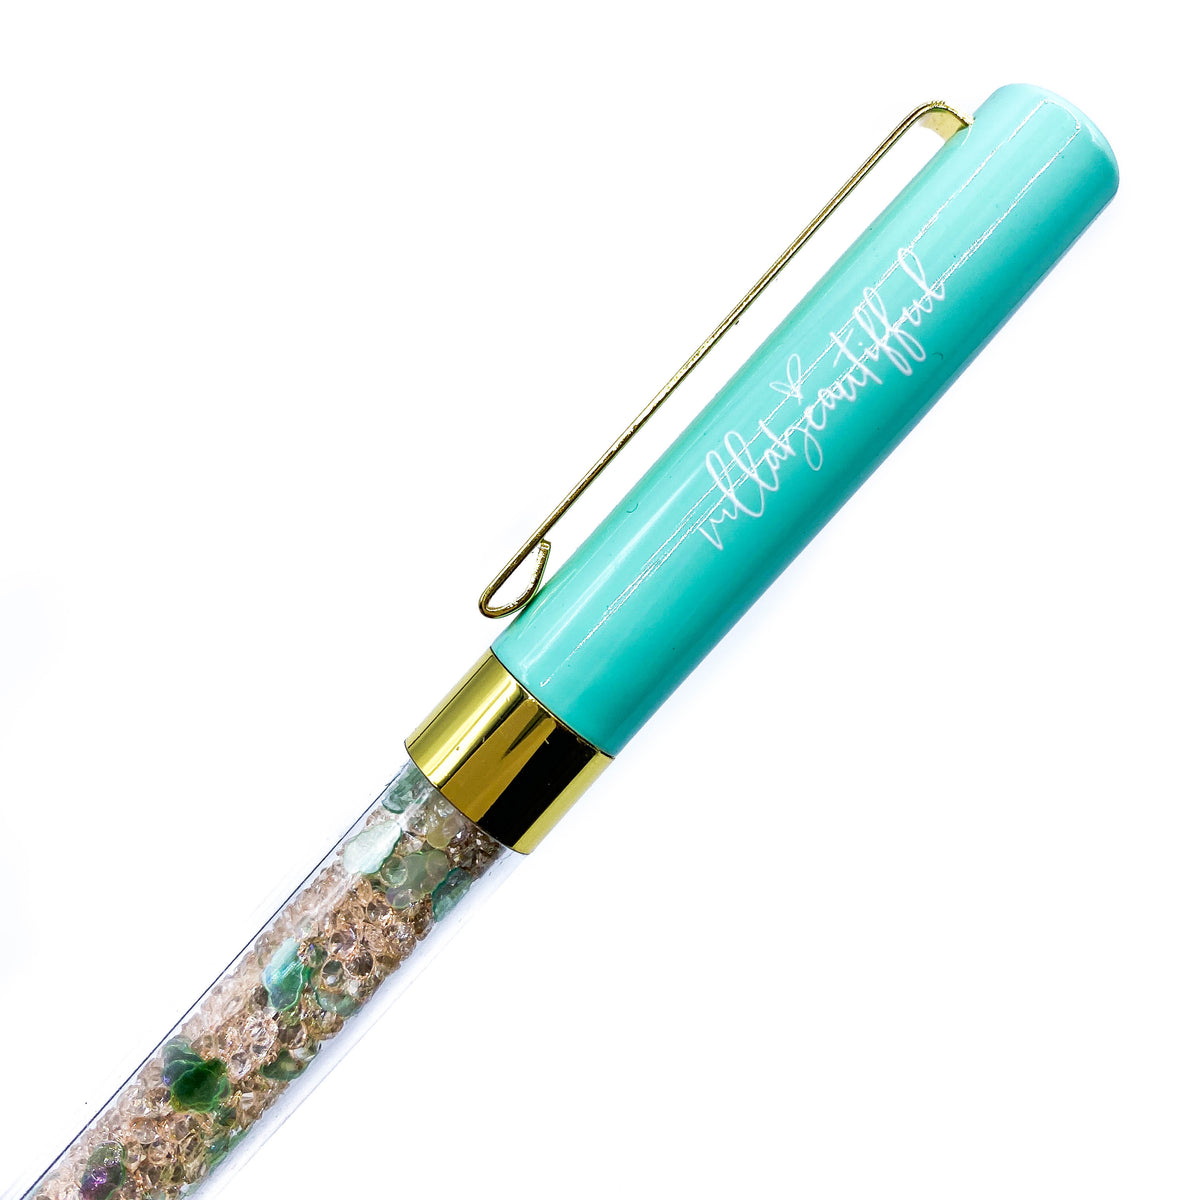 Dream Big Crystal VBPen | limited kit pen